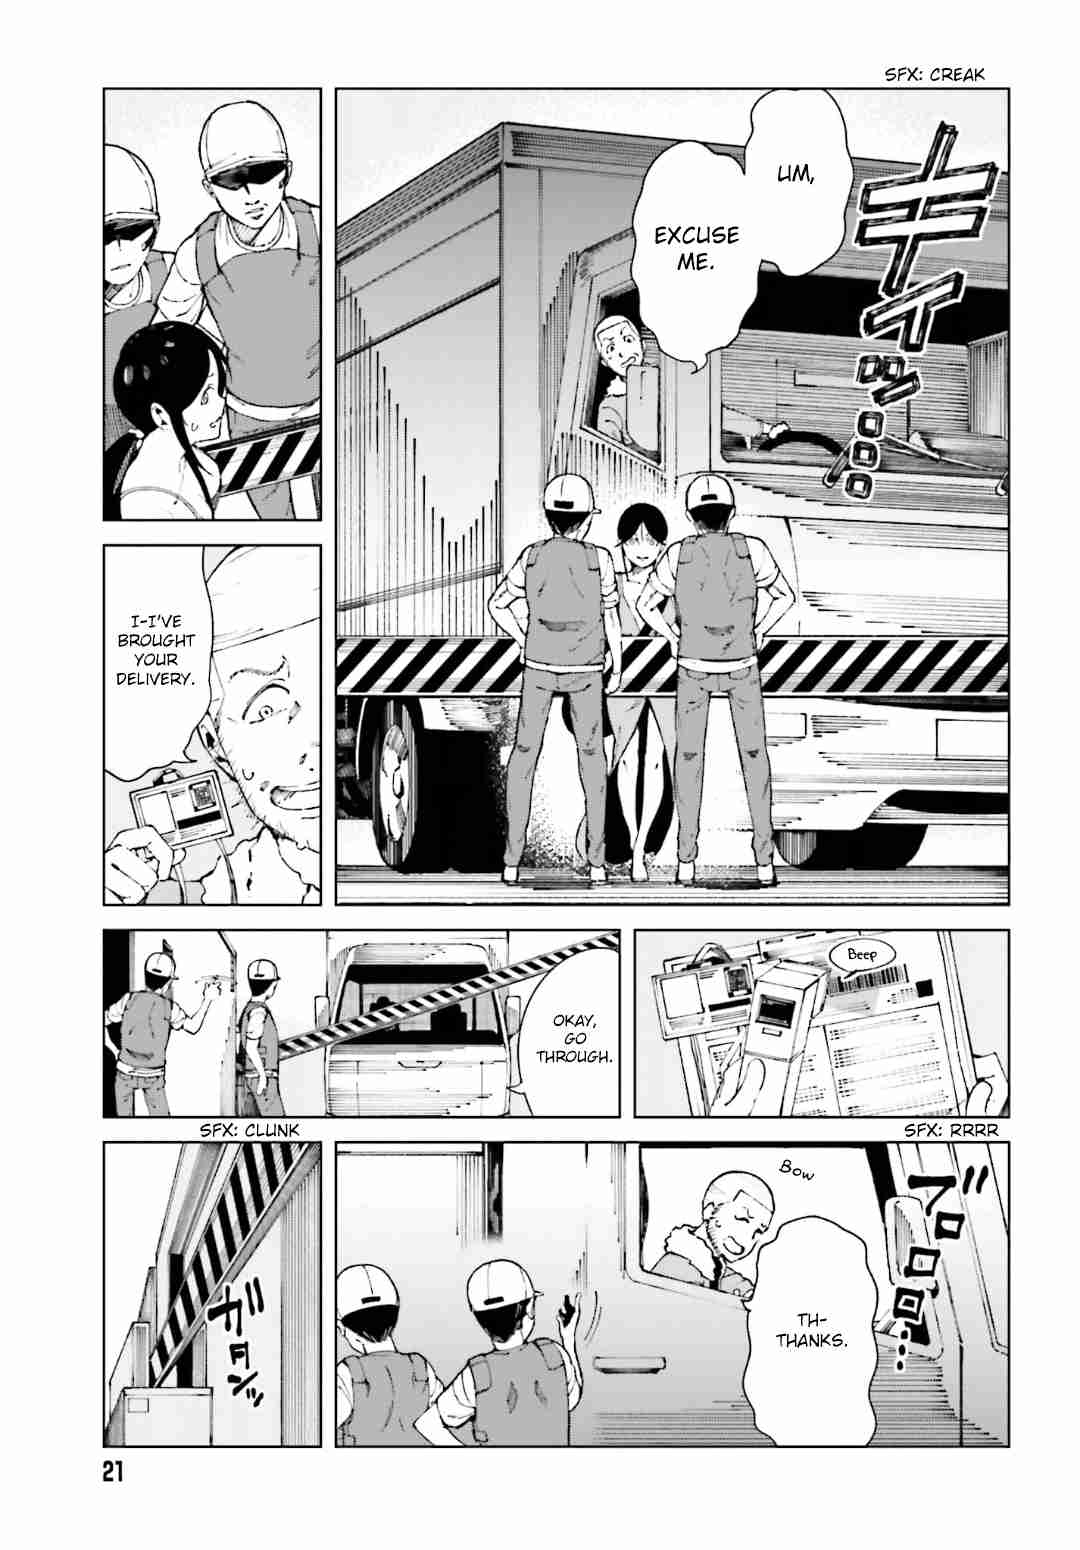 Toaru Kagaku no Accelerator Vol. 10 Ch. 52